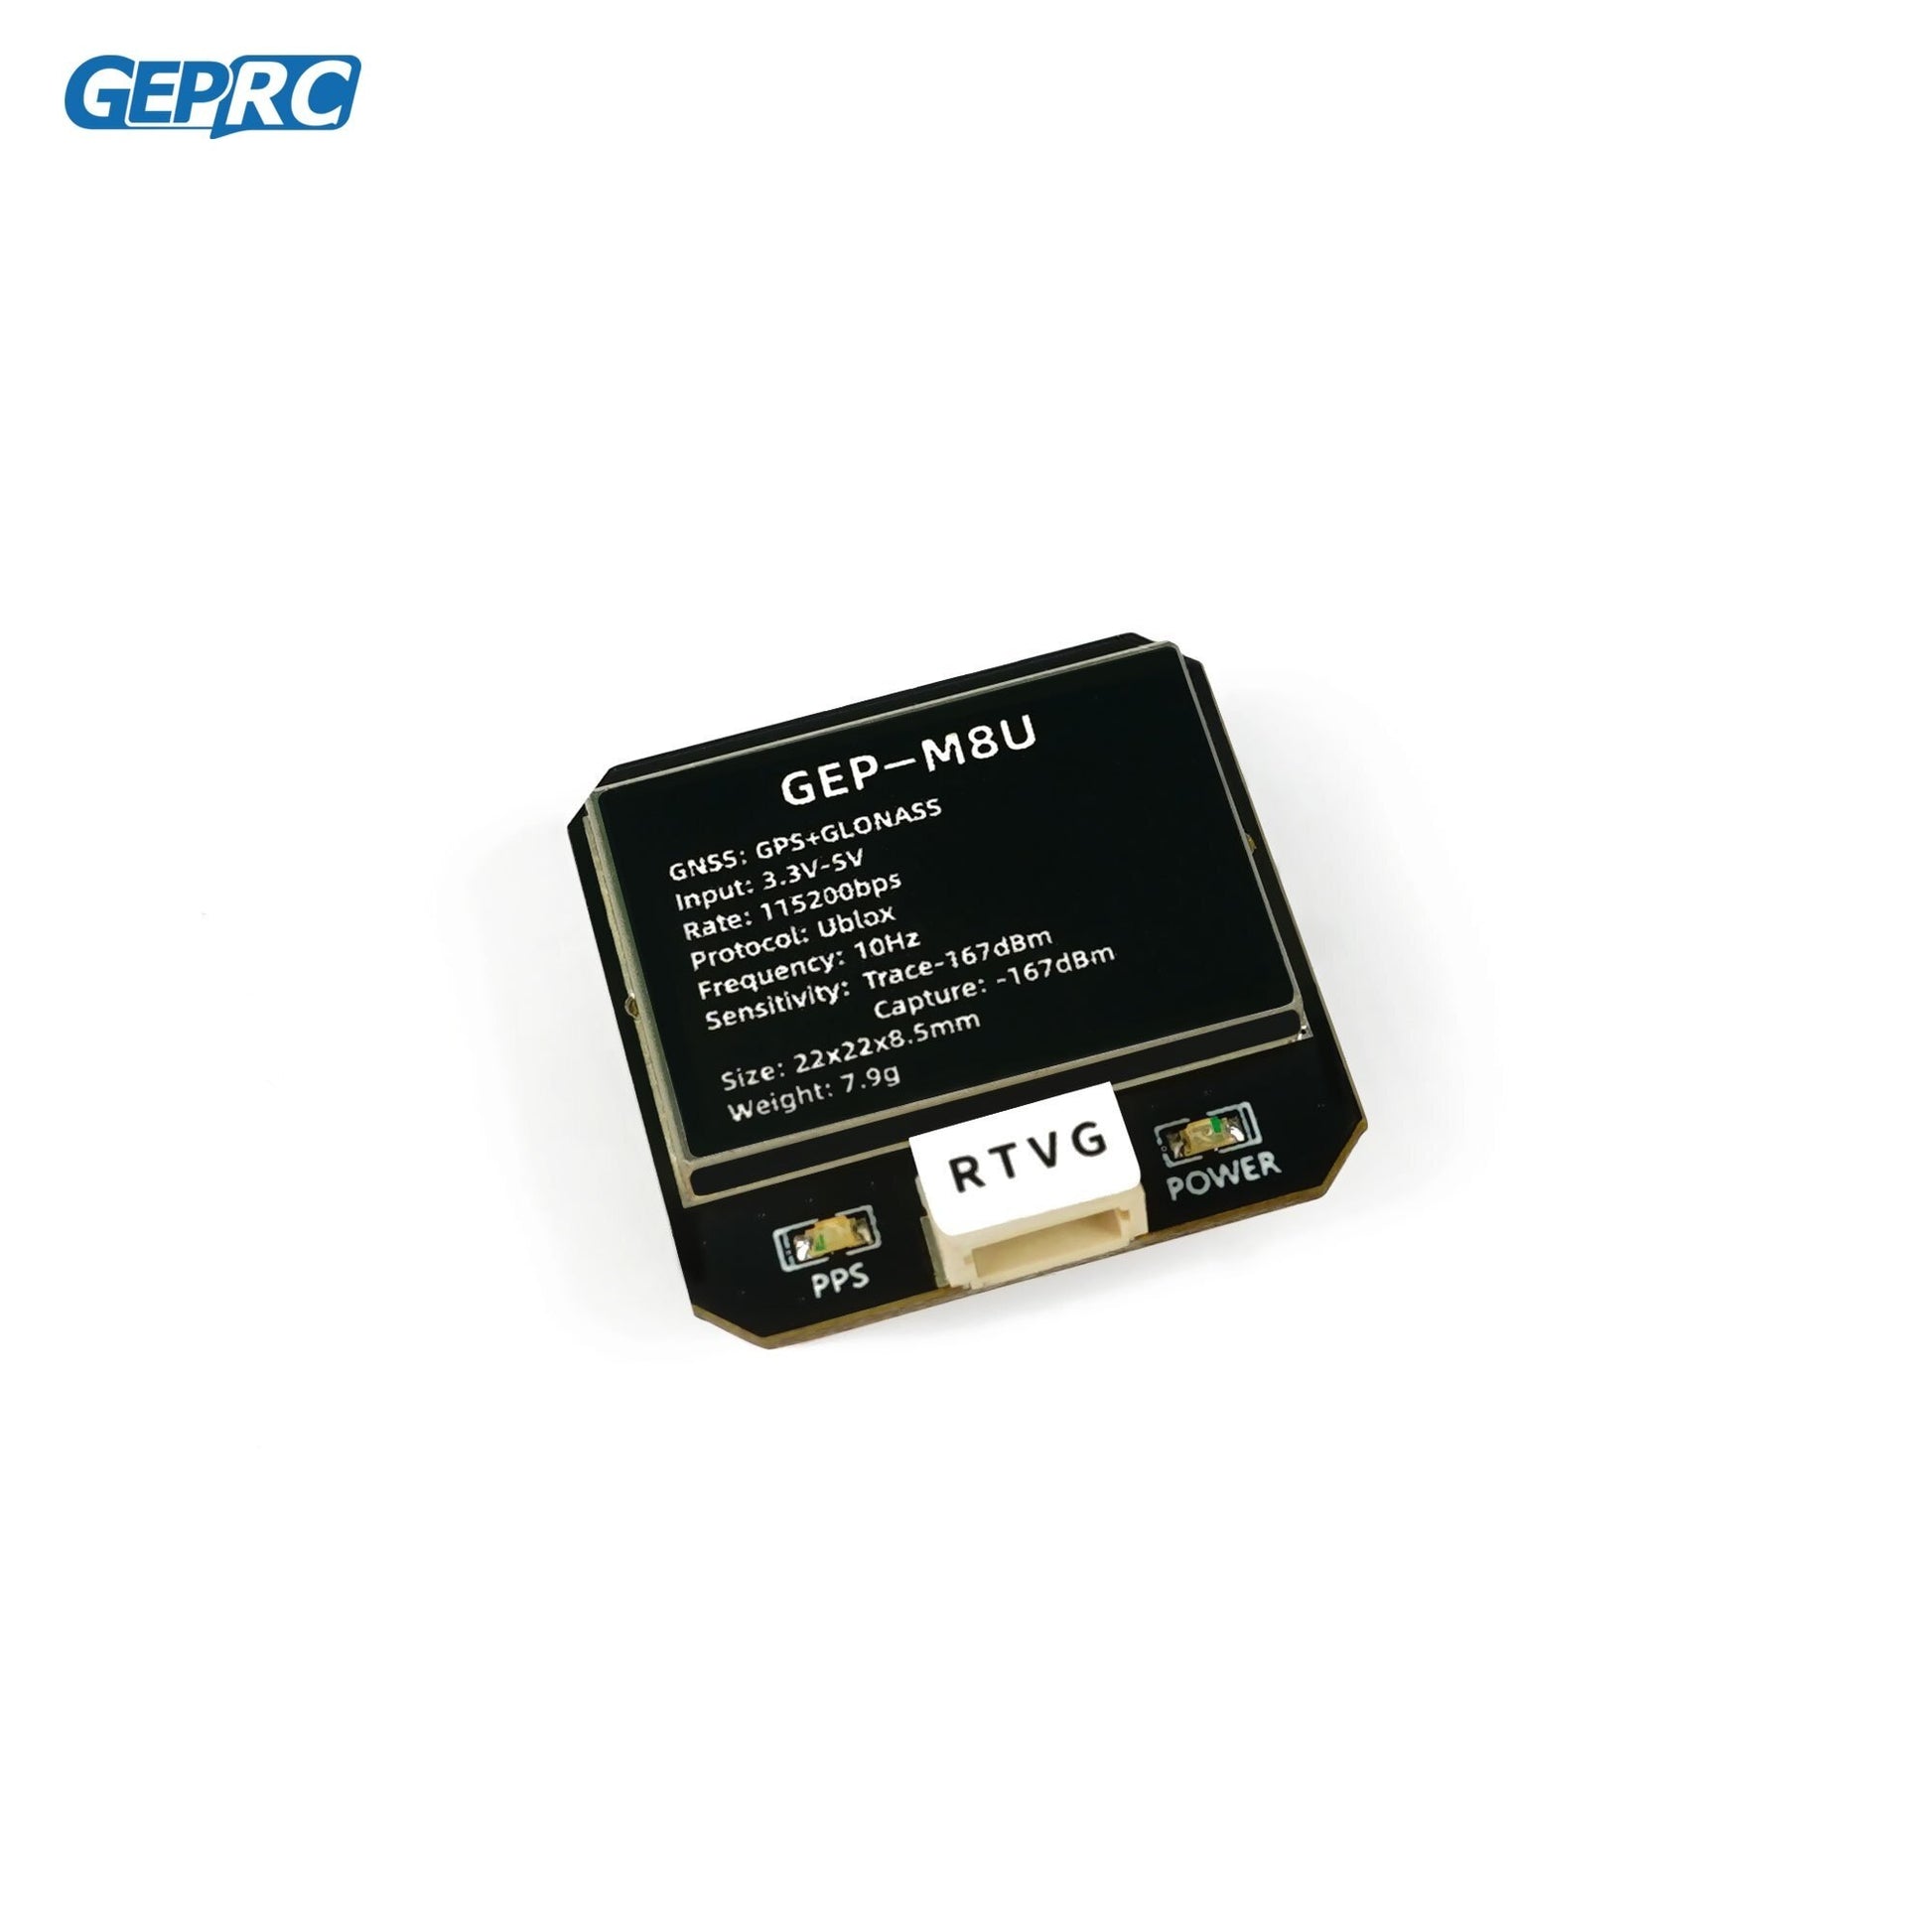 GEPRC GEP-M8U GPS Module, GPS+GLOMASS GNSS: 3V-SV 115zo0